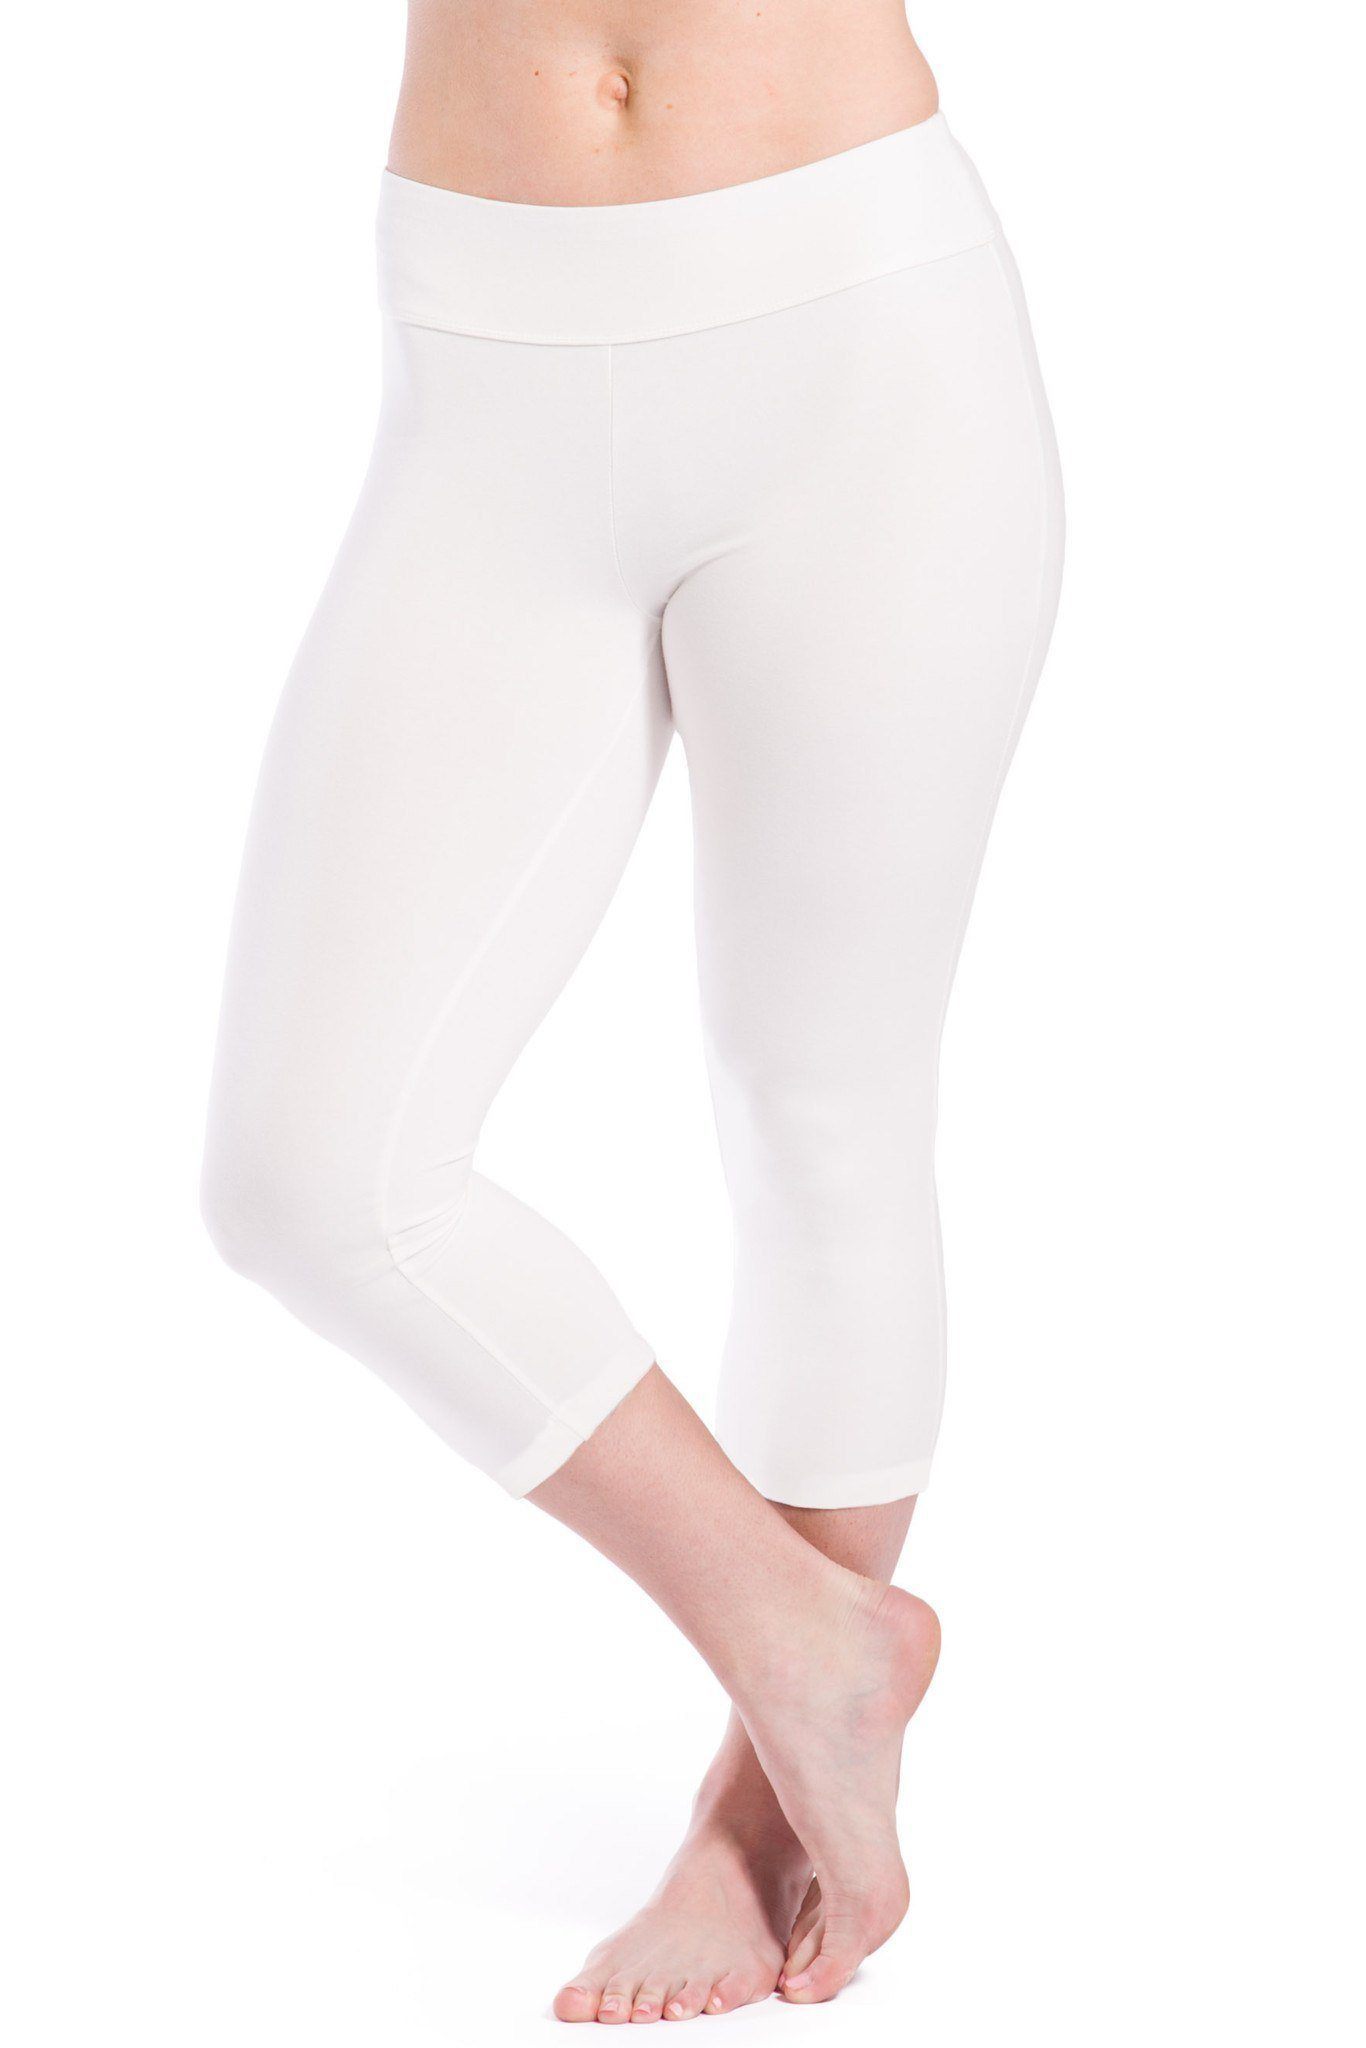 Womens Small Sizes Capri Crop Yoga Pants, Waistband Pocket, Cotton